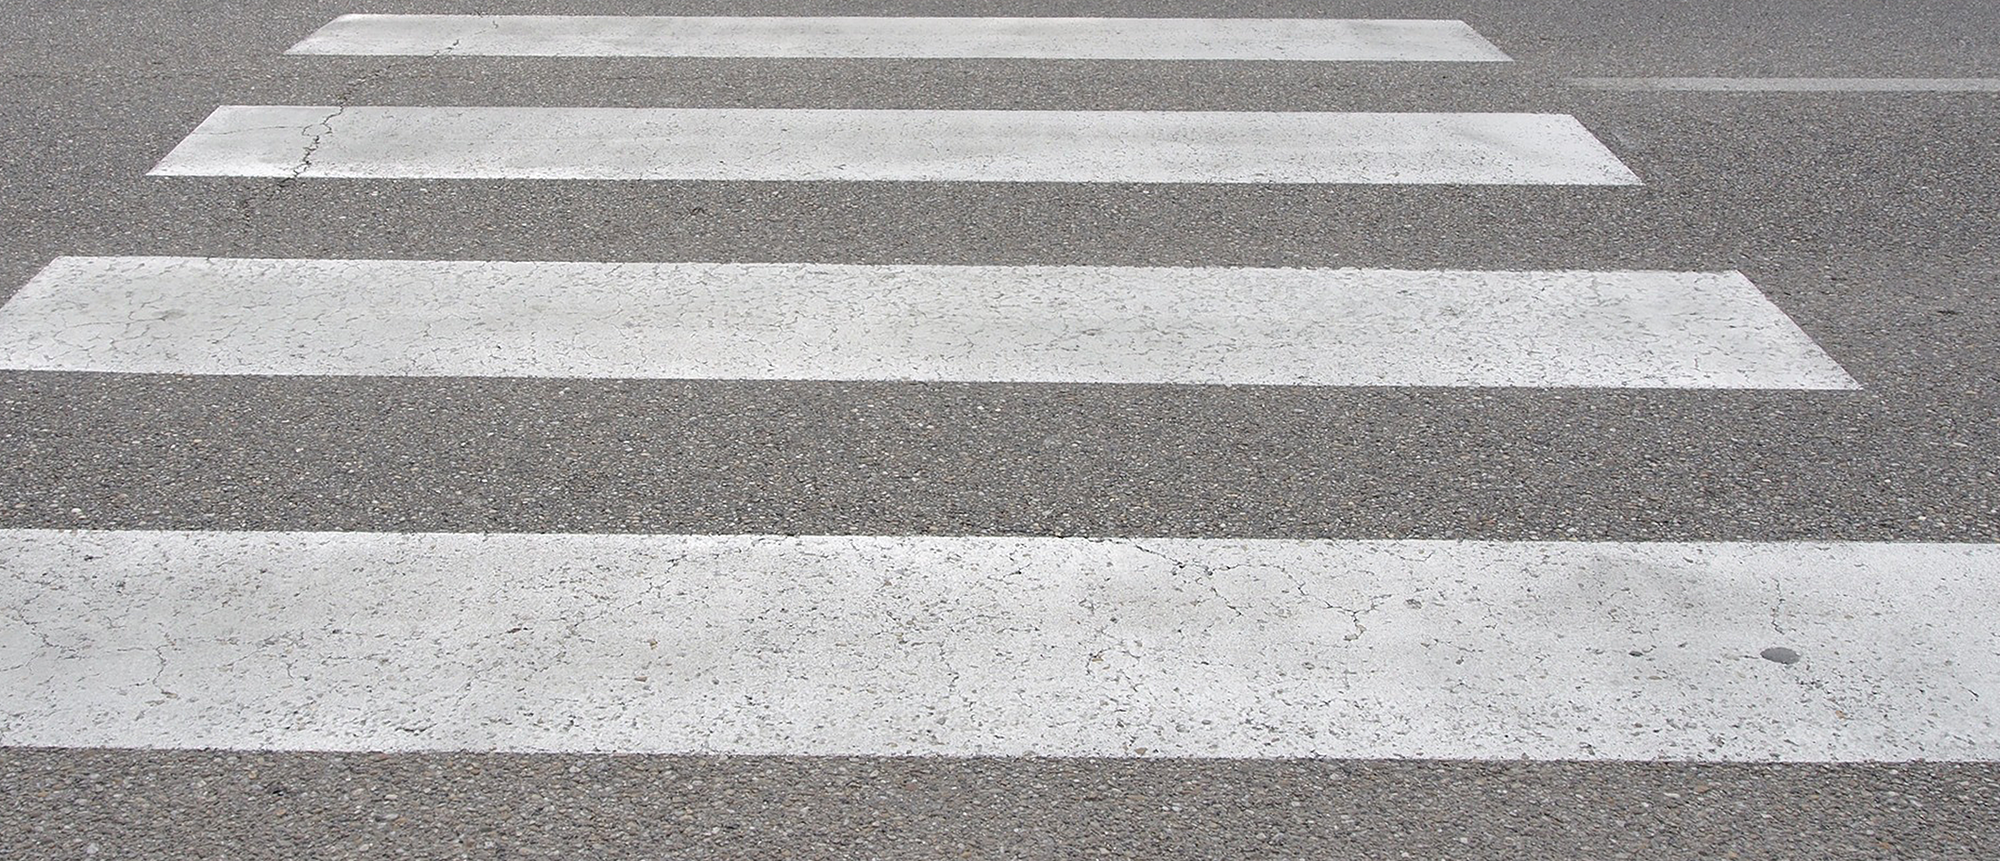 Crosswalk Improvements – Conception Bay Highway / Easons Road Crosswalk